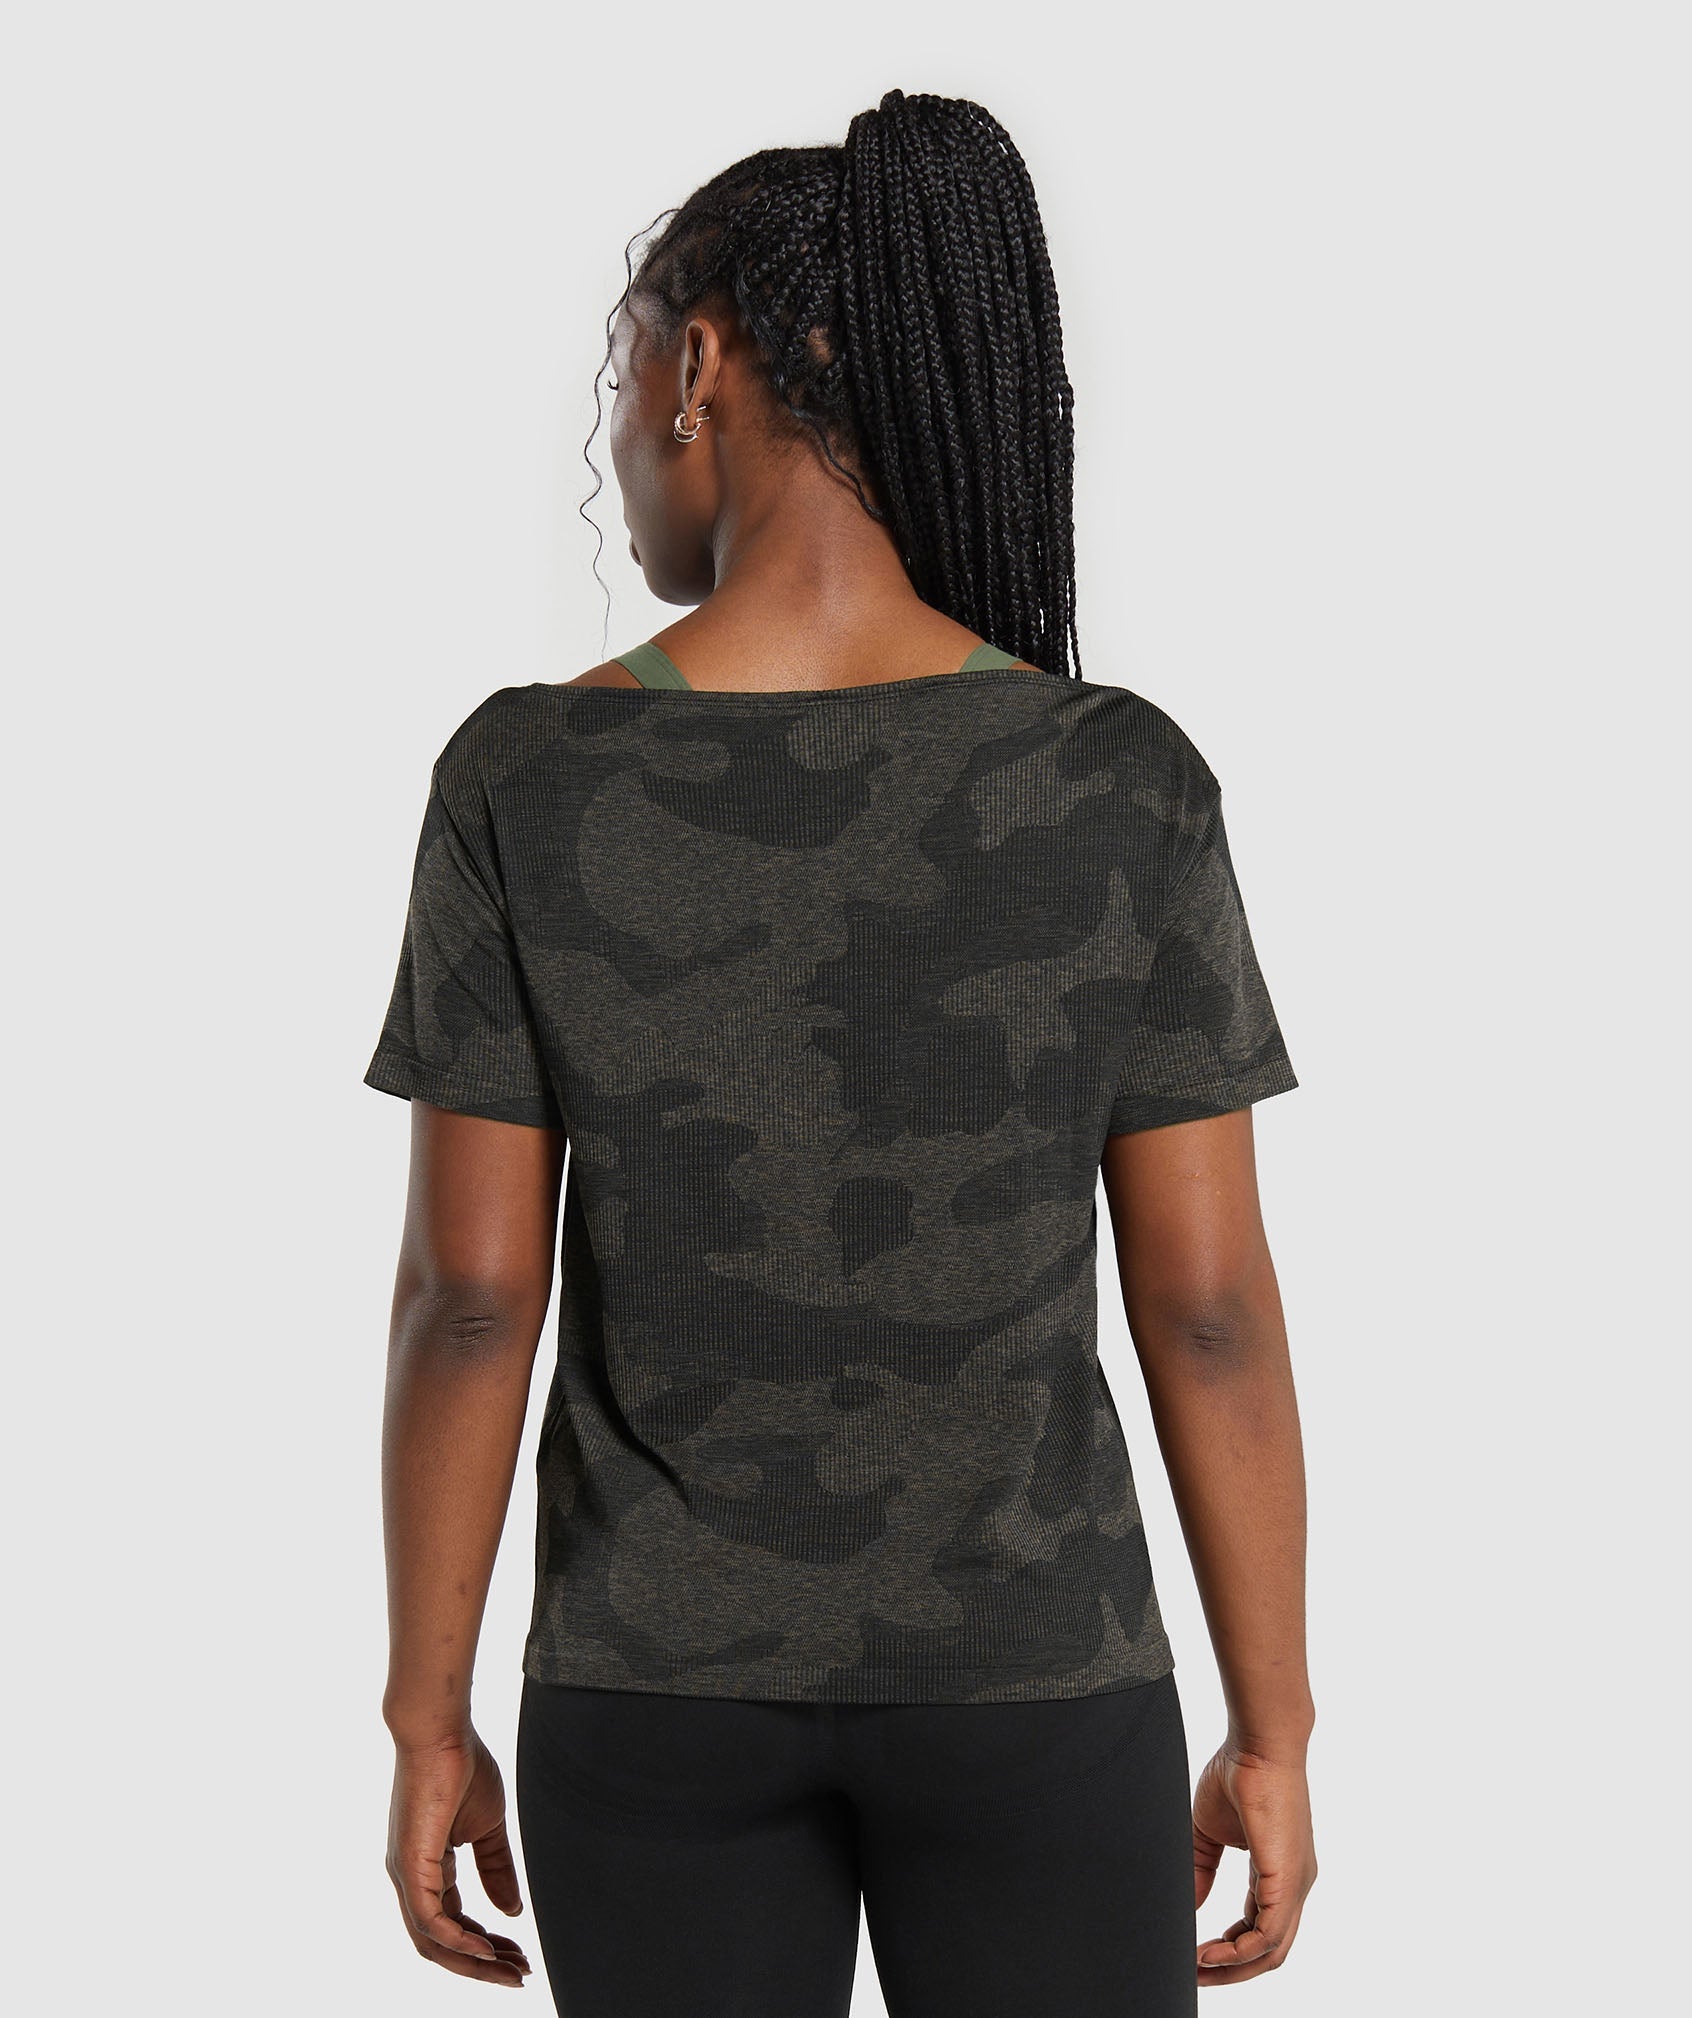 Adapt Camo Seamless T-Shirt in Black/Camo Brown - view 2